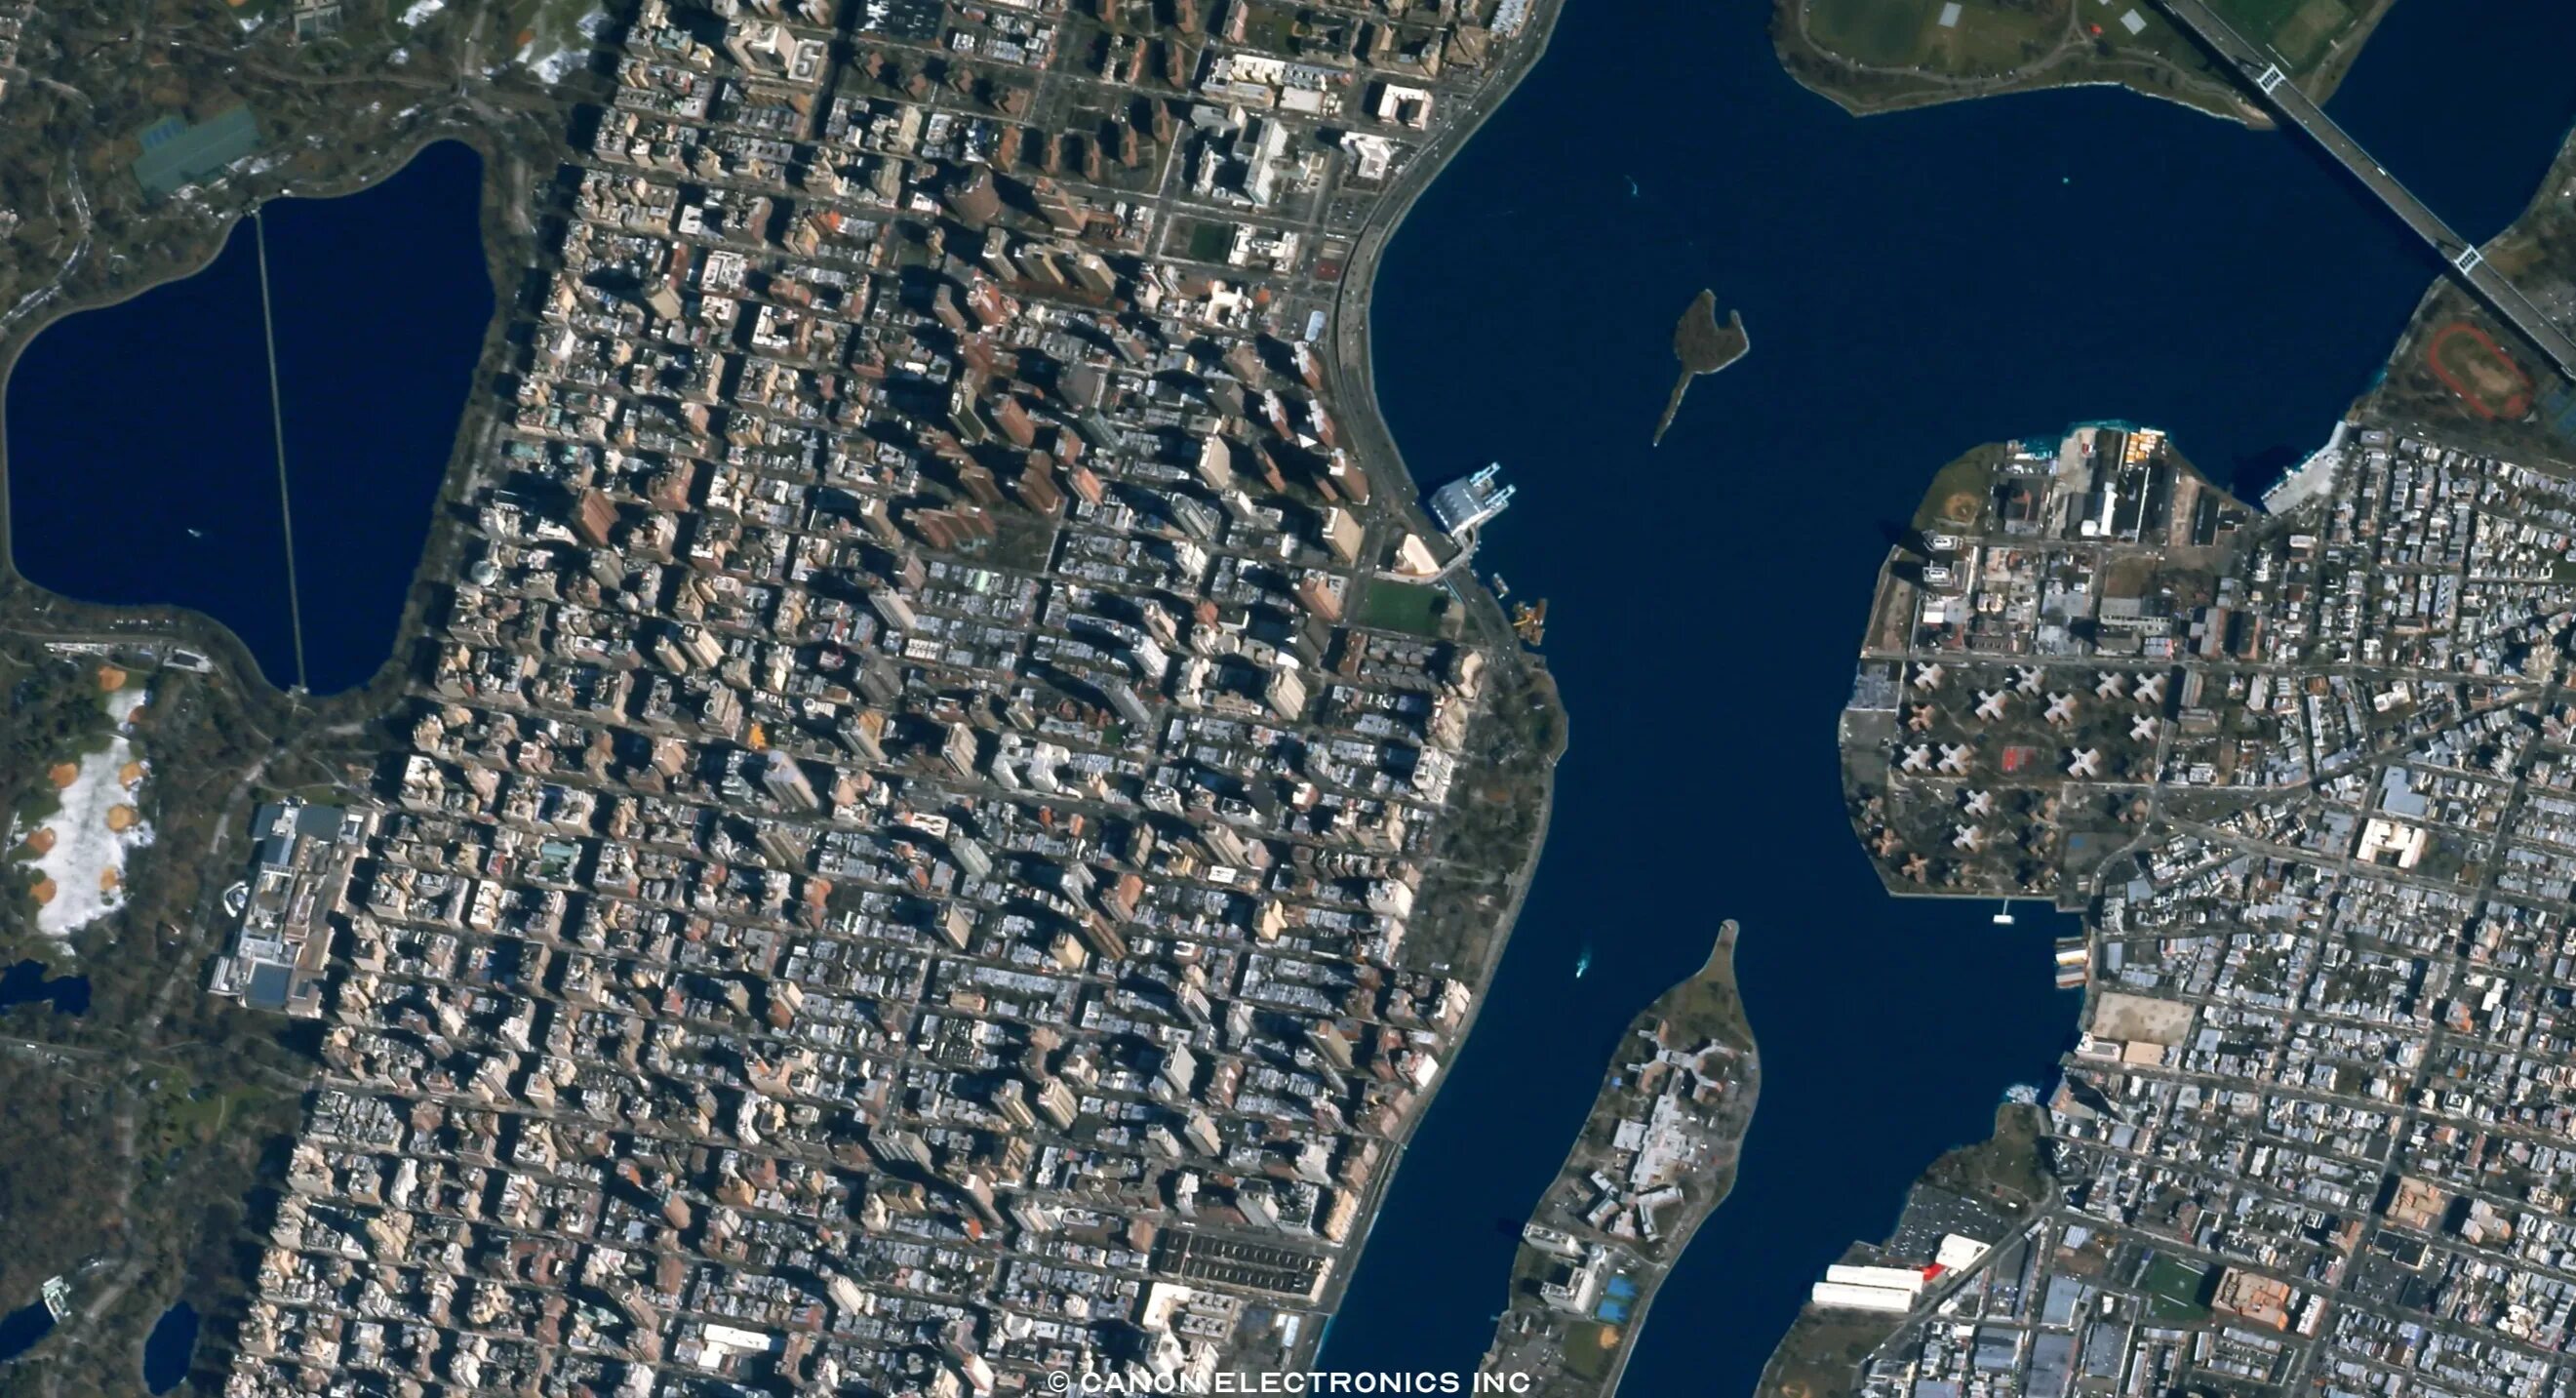 Нью Йорк 1970 со спутника. Снимки со спутника в реальном времени. Титаник вид со спутника. Камера со спутника в реальном времени. Реальное изображение со спутника